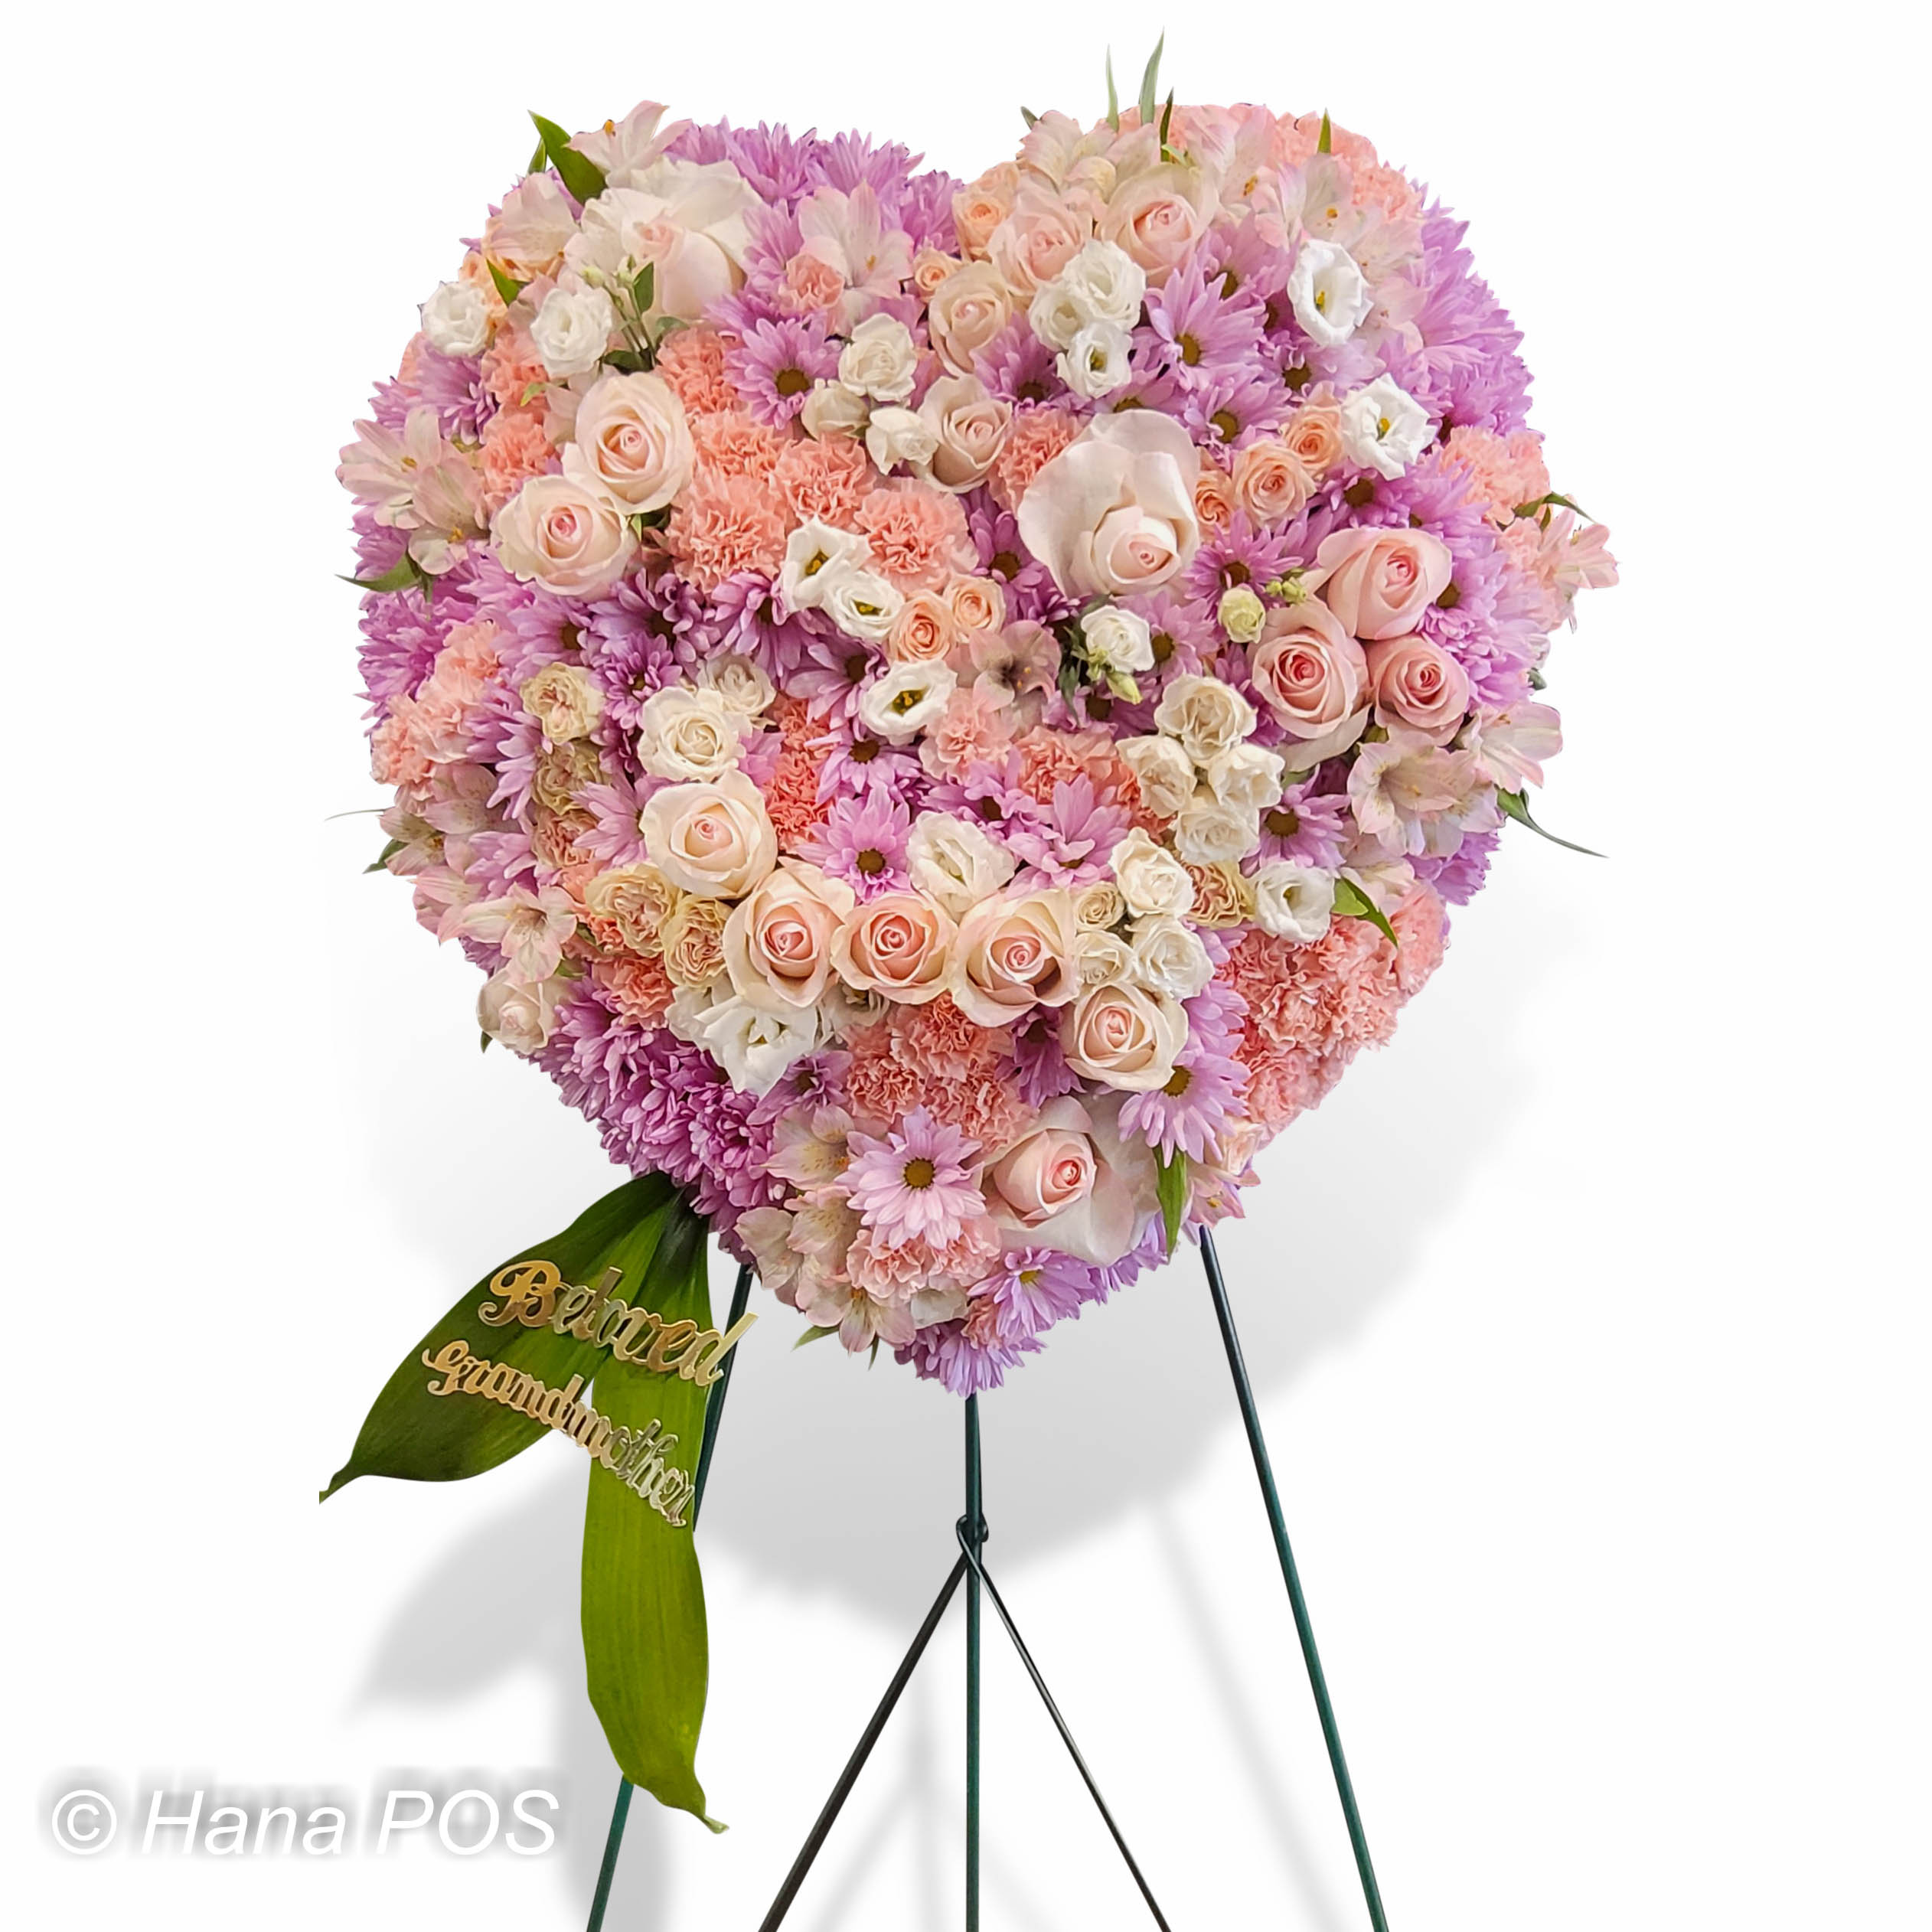 Full Heart Flower Bouquet